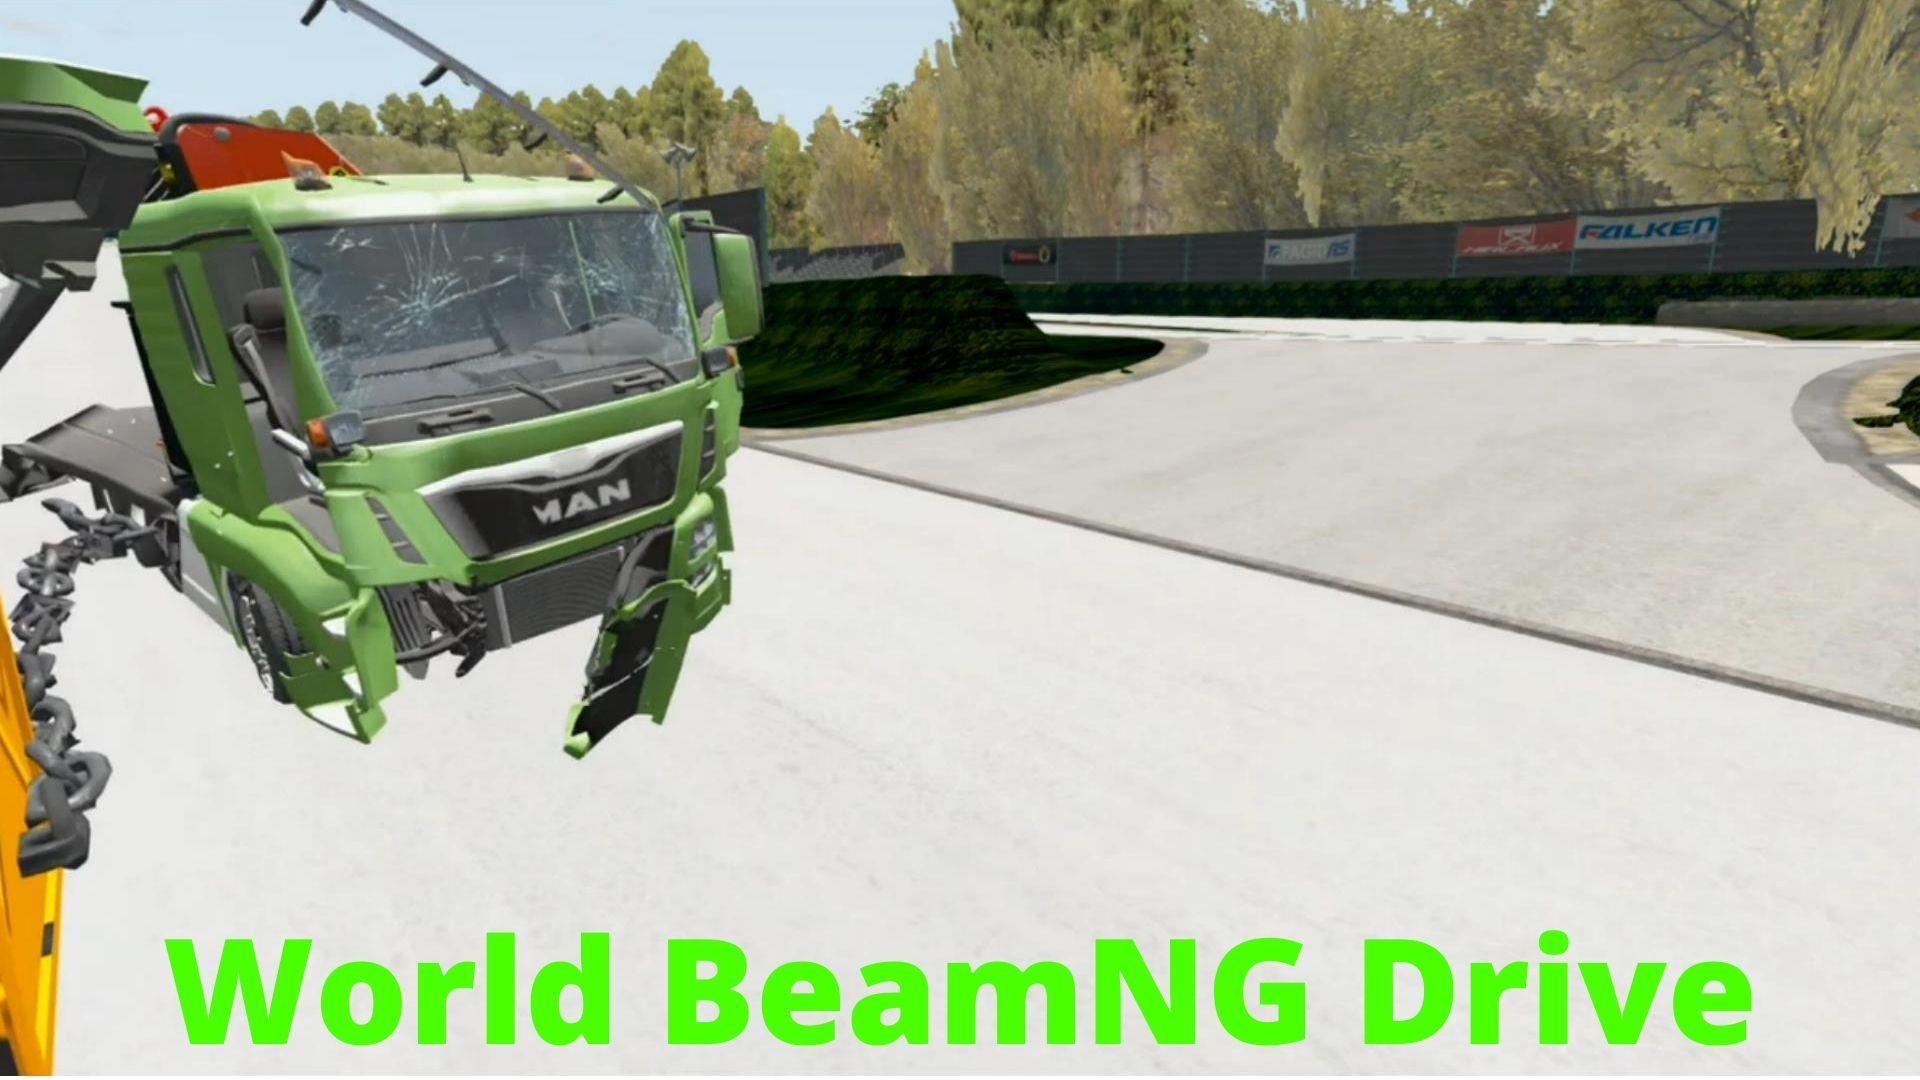 Машины и спиннер #1 - BeamNG Drive | World BeamNG Drive